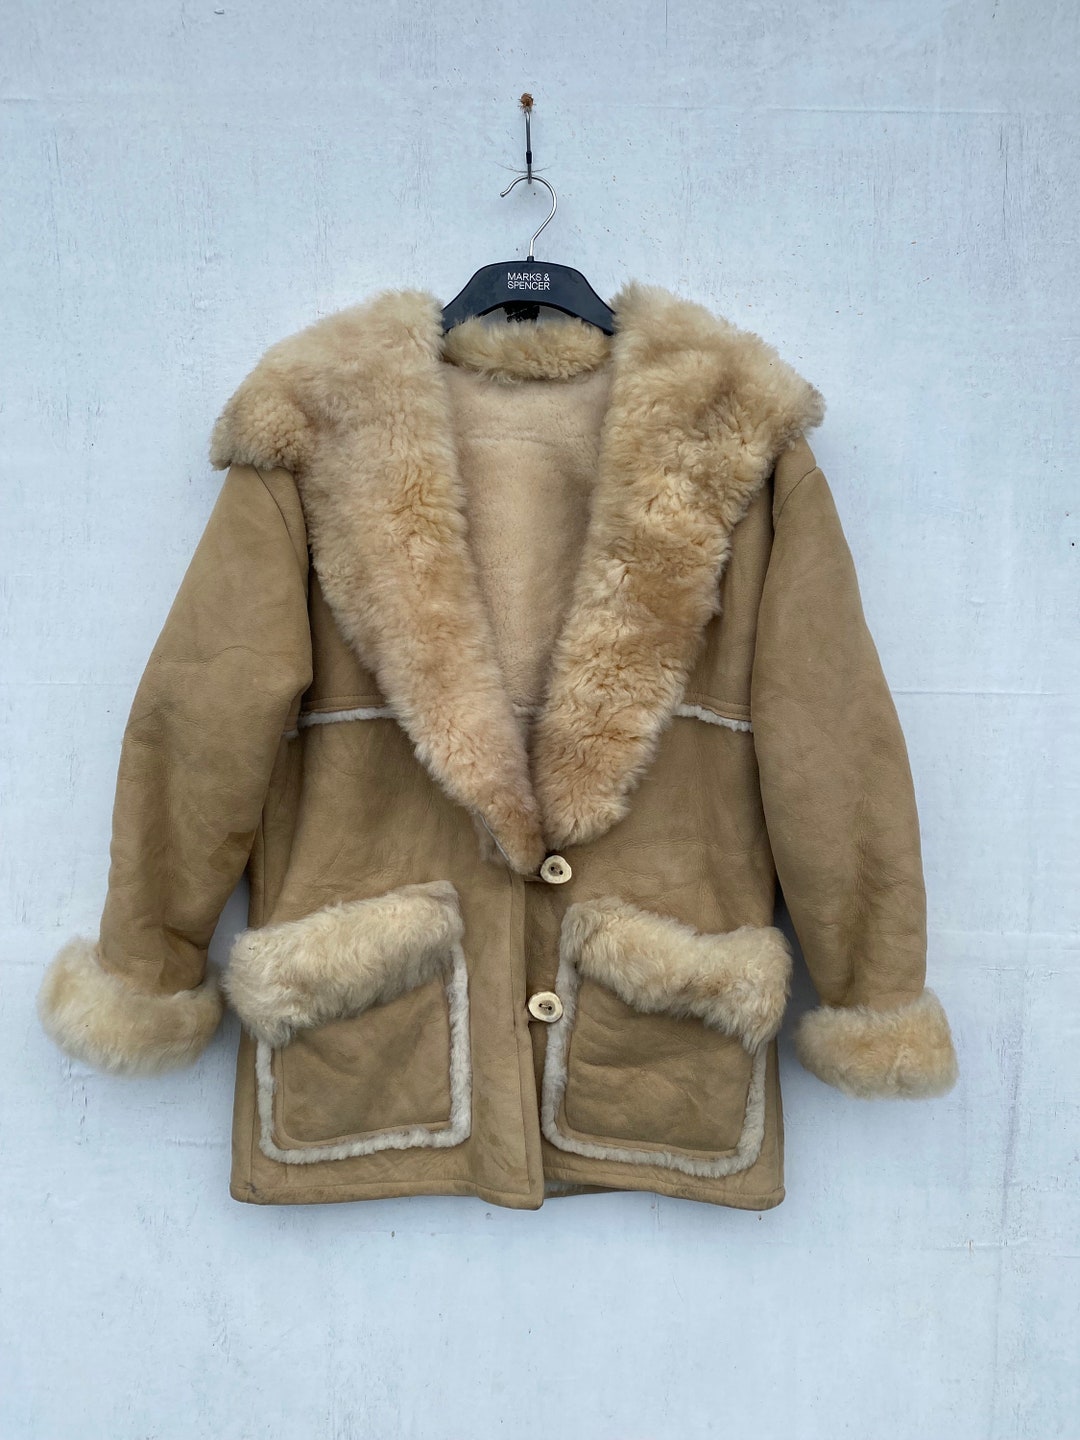 Vintage Overland Coat, Leather Jacket Sherpa Design Sheep Skin Rare, - Etsy